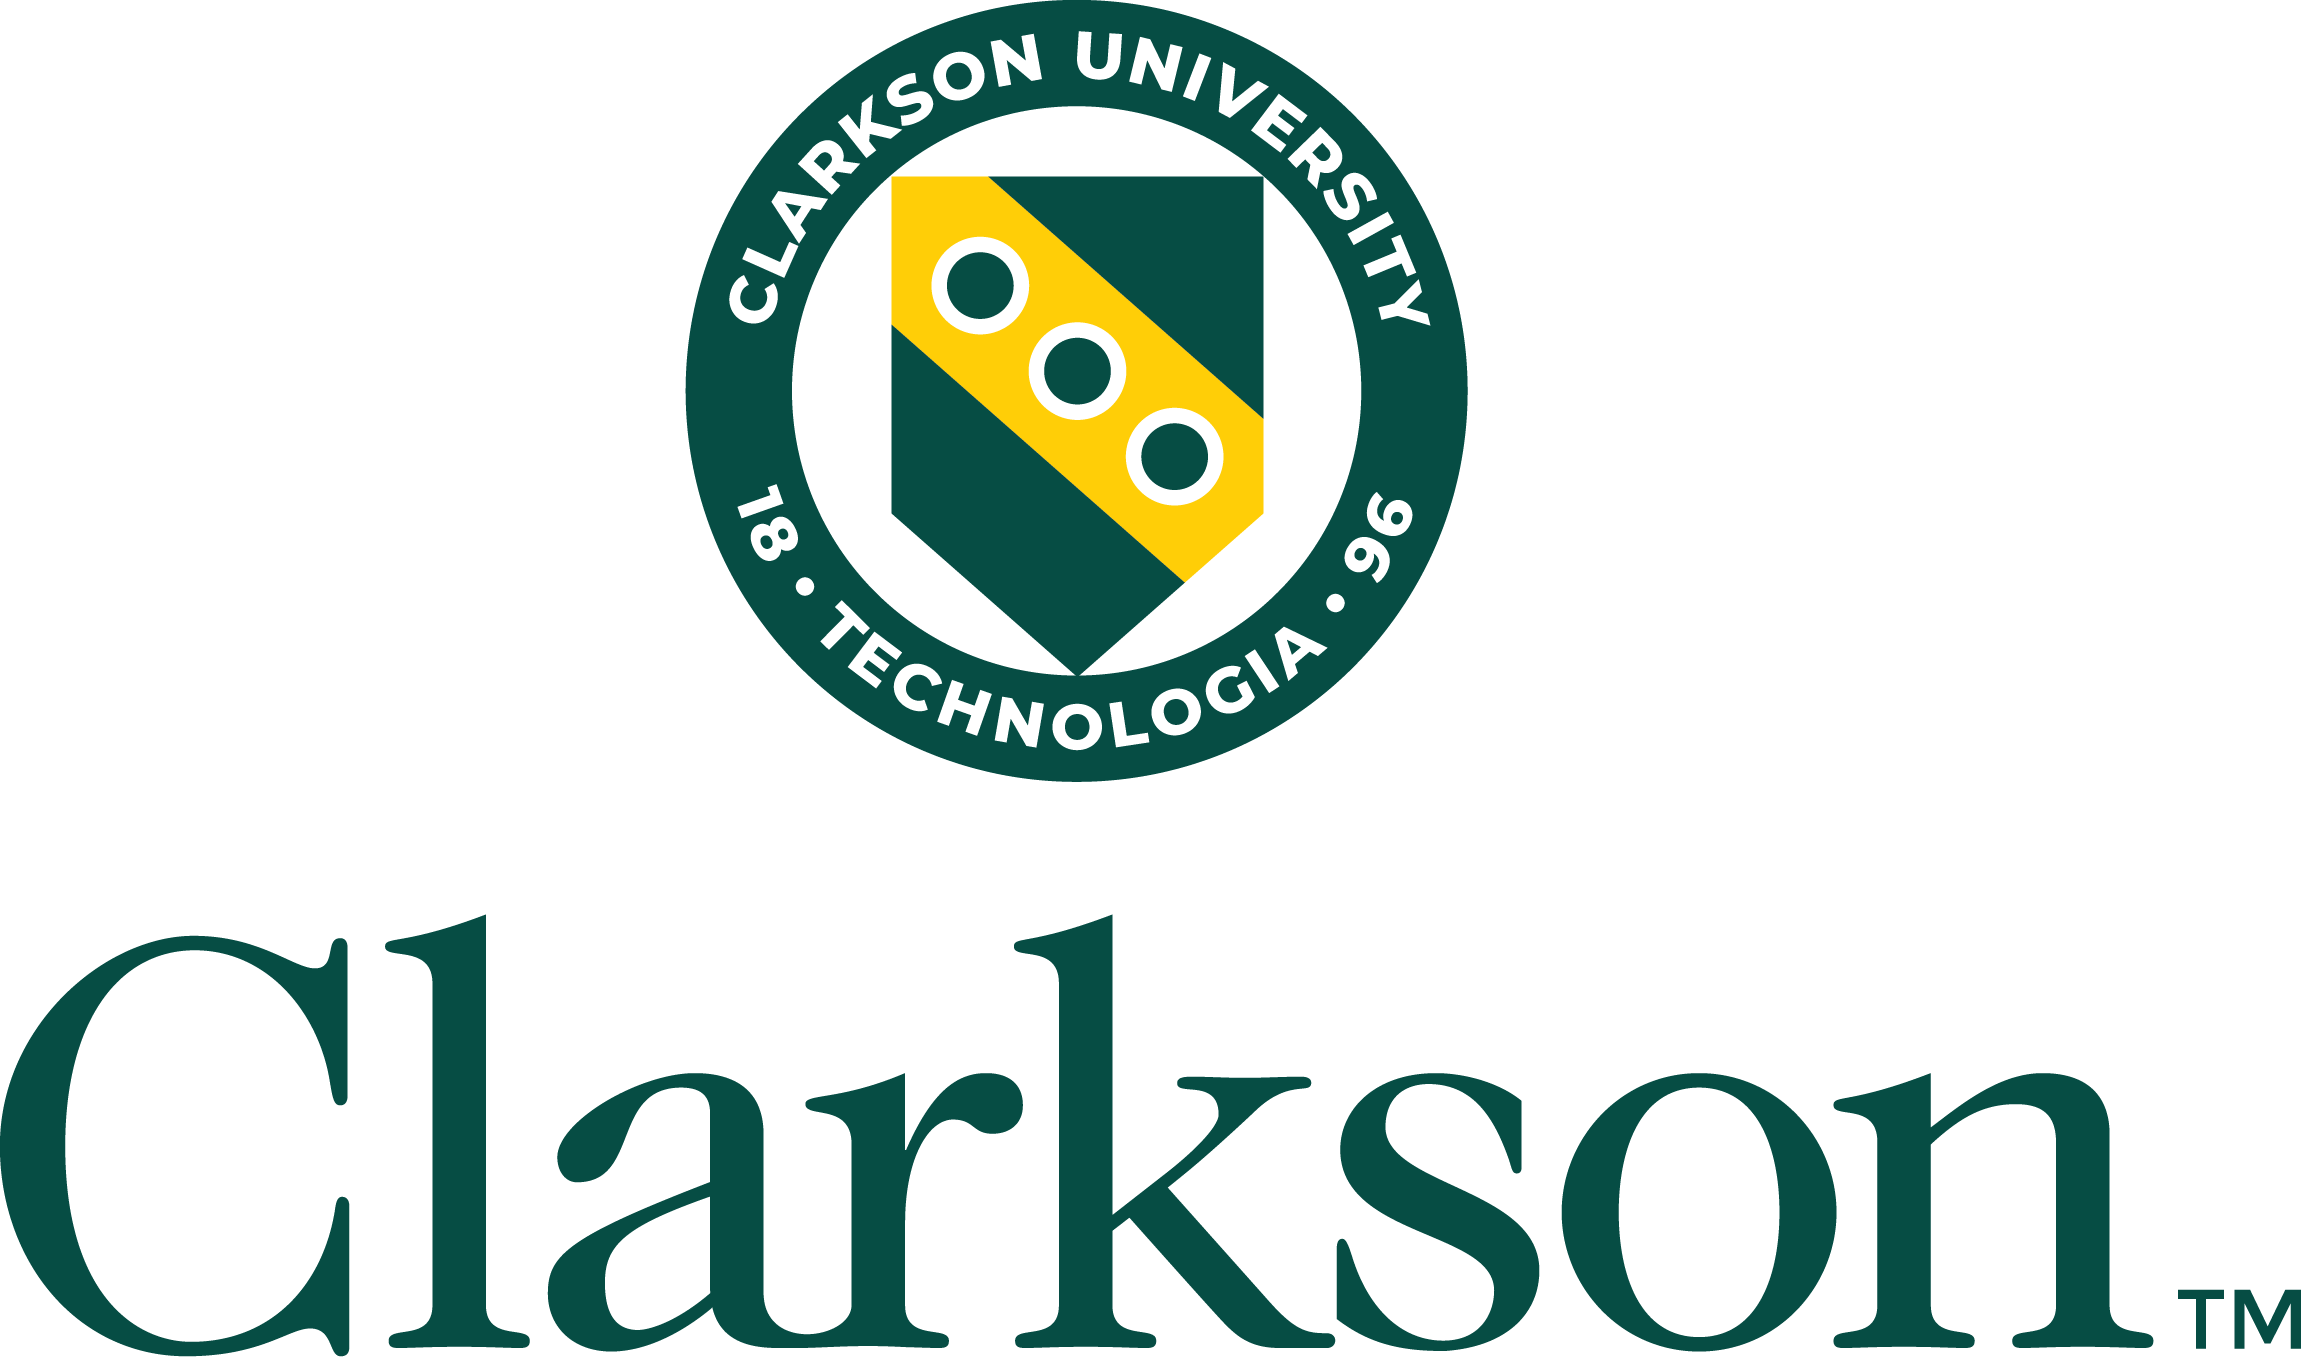 Clarkson University logo.